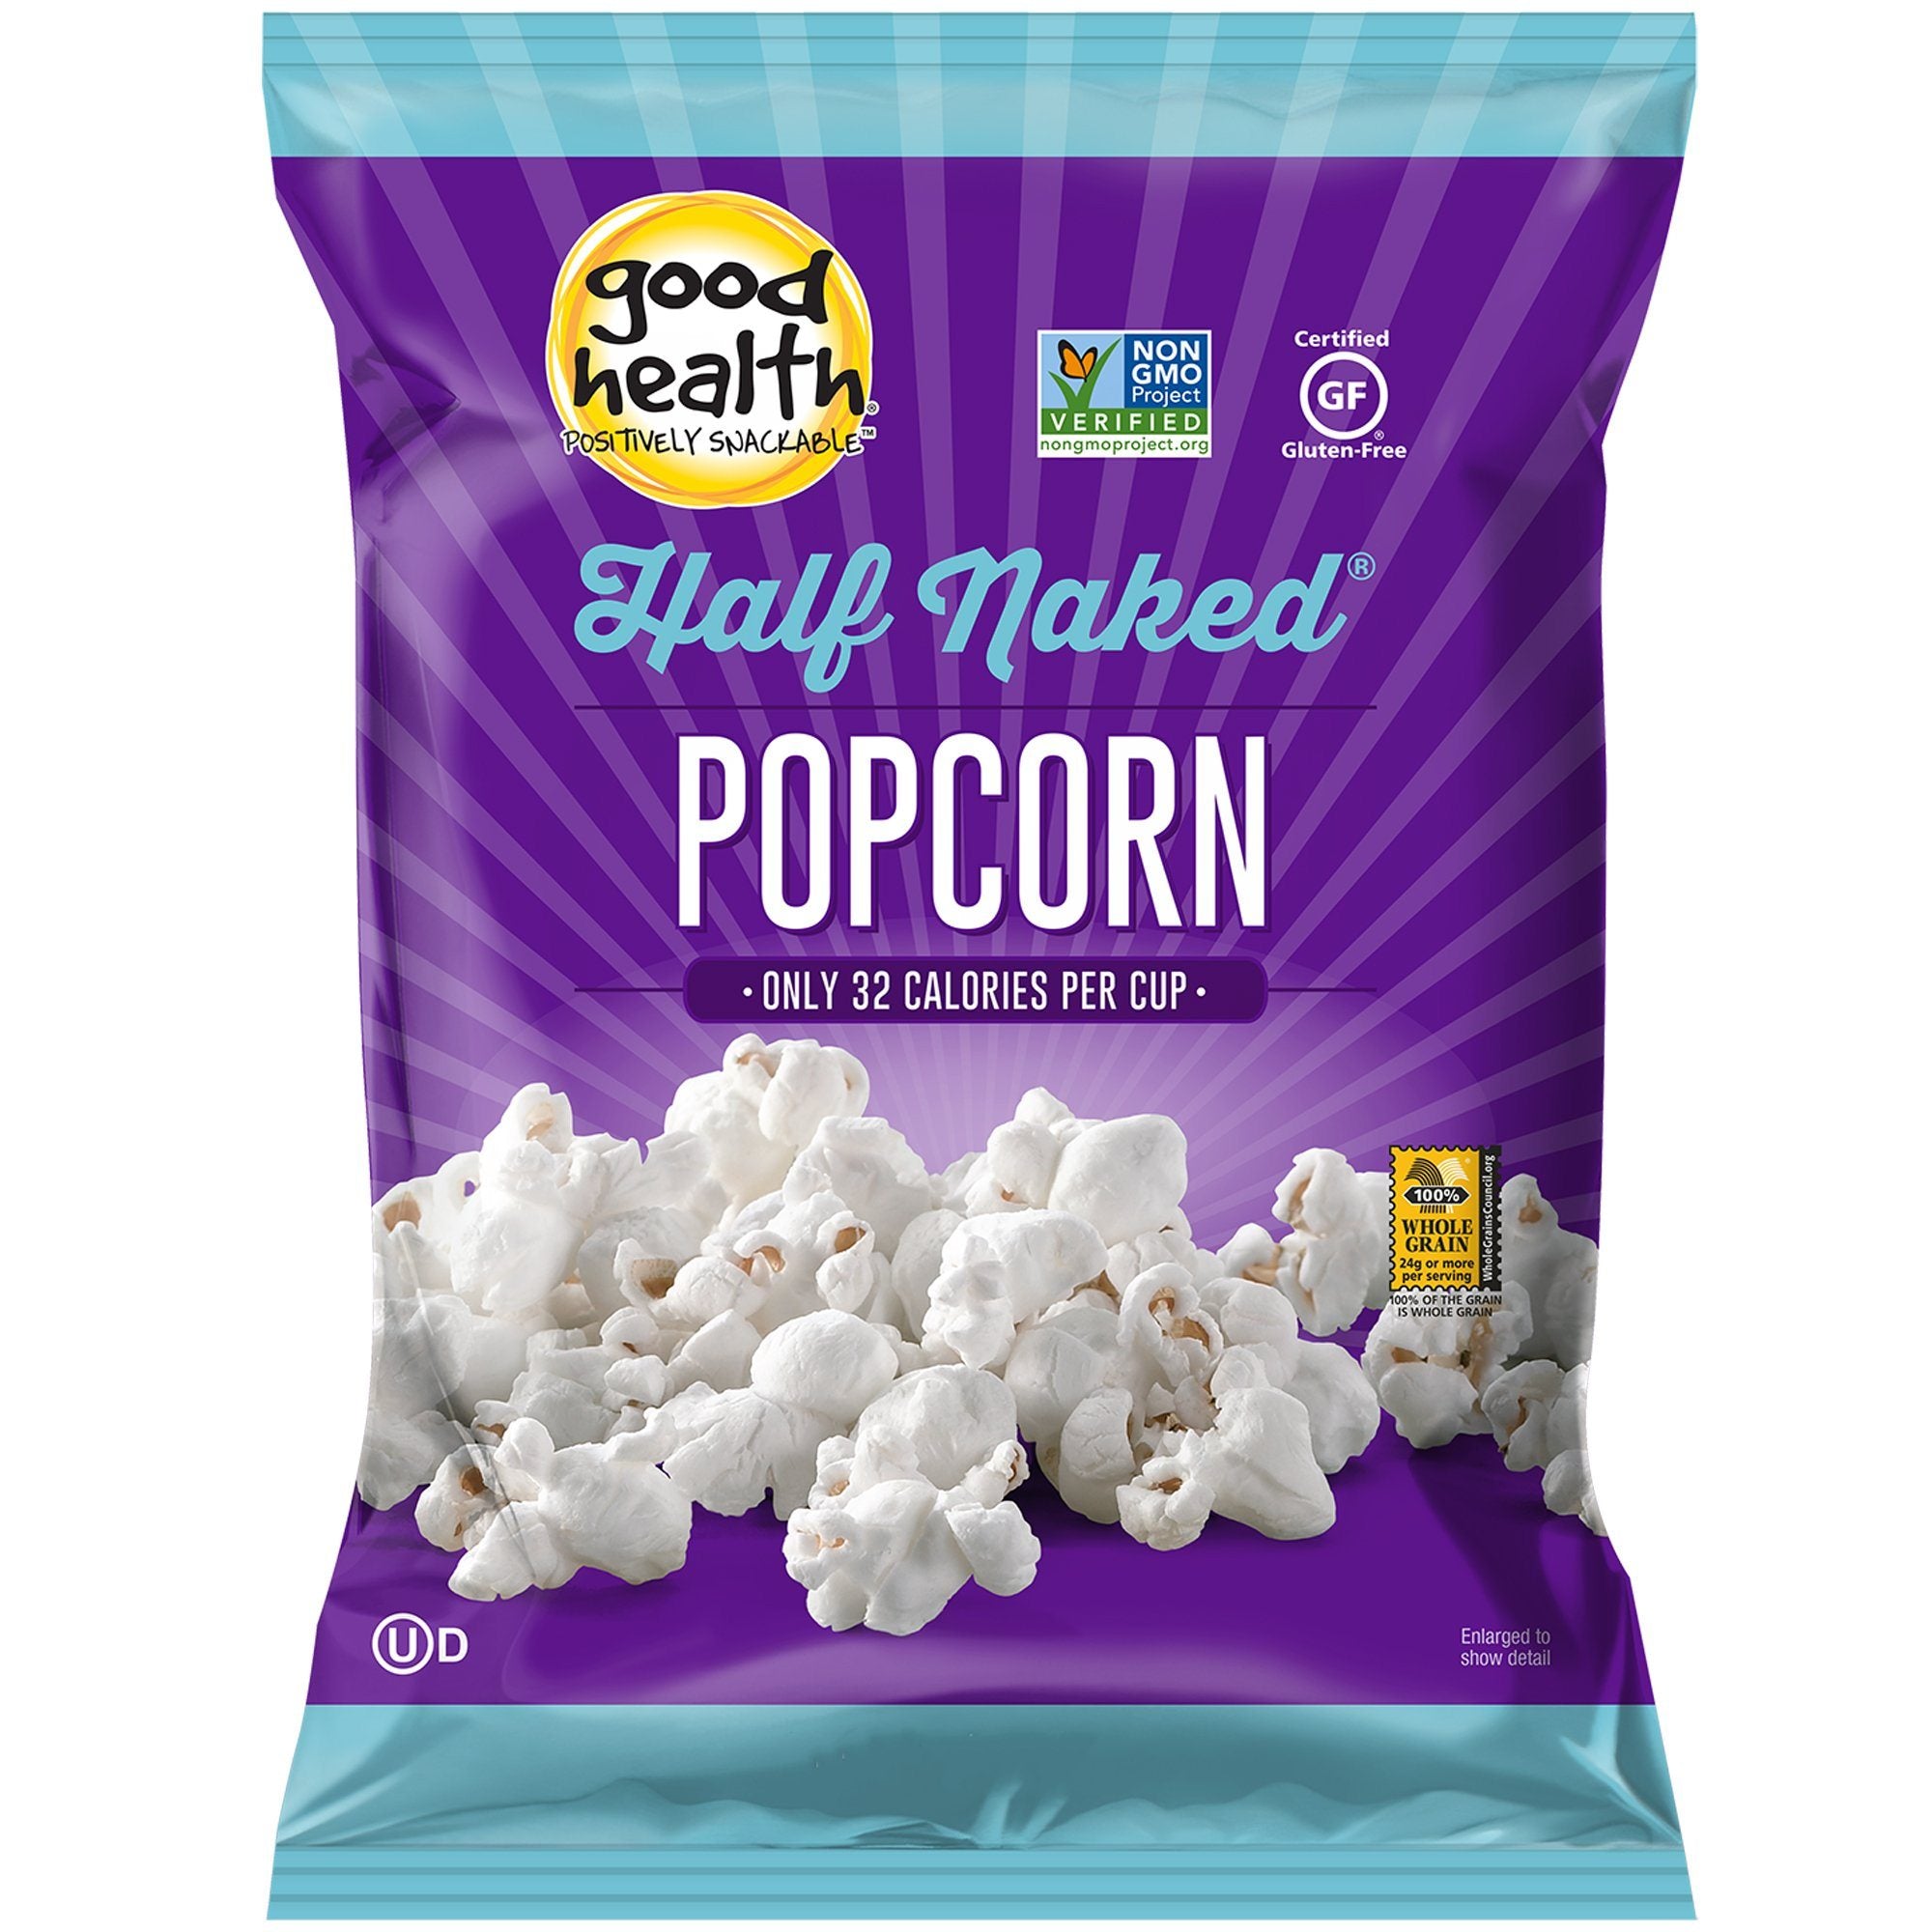 Good Health® Half Naked™ Popcorn, Hint of Olive Oil Popcorn Good Health 5.25 oz. - 8 count, Popcorn, Popcorn Olive Oil, Popcorn with Olive Oil